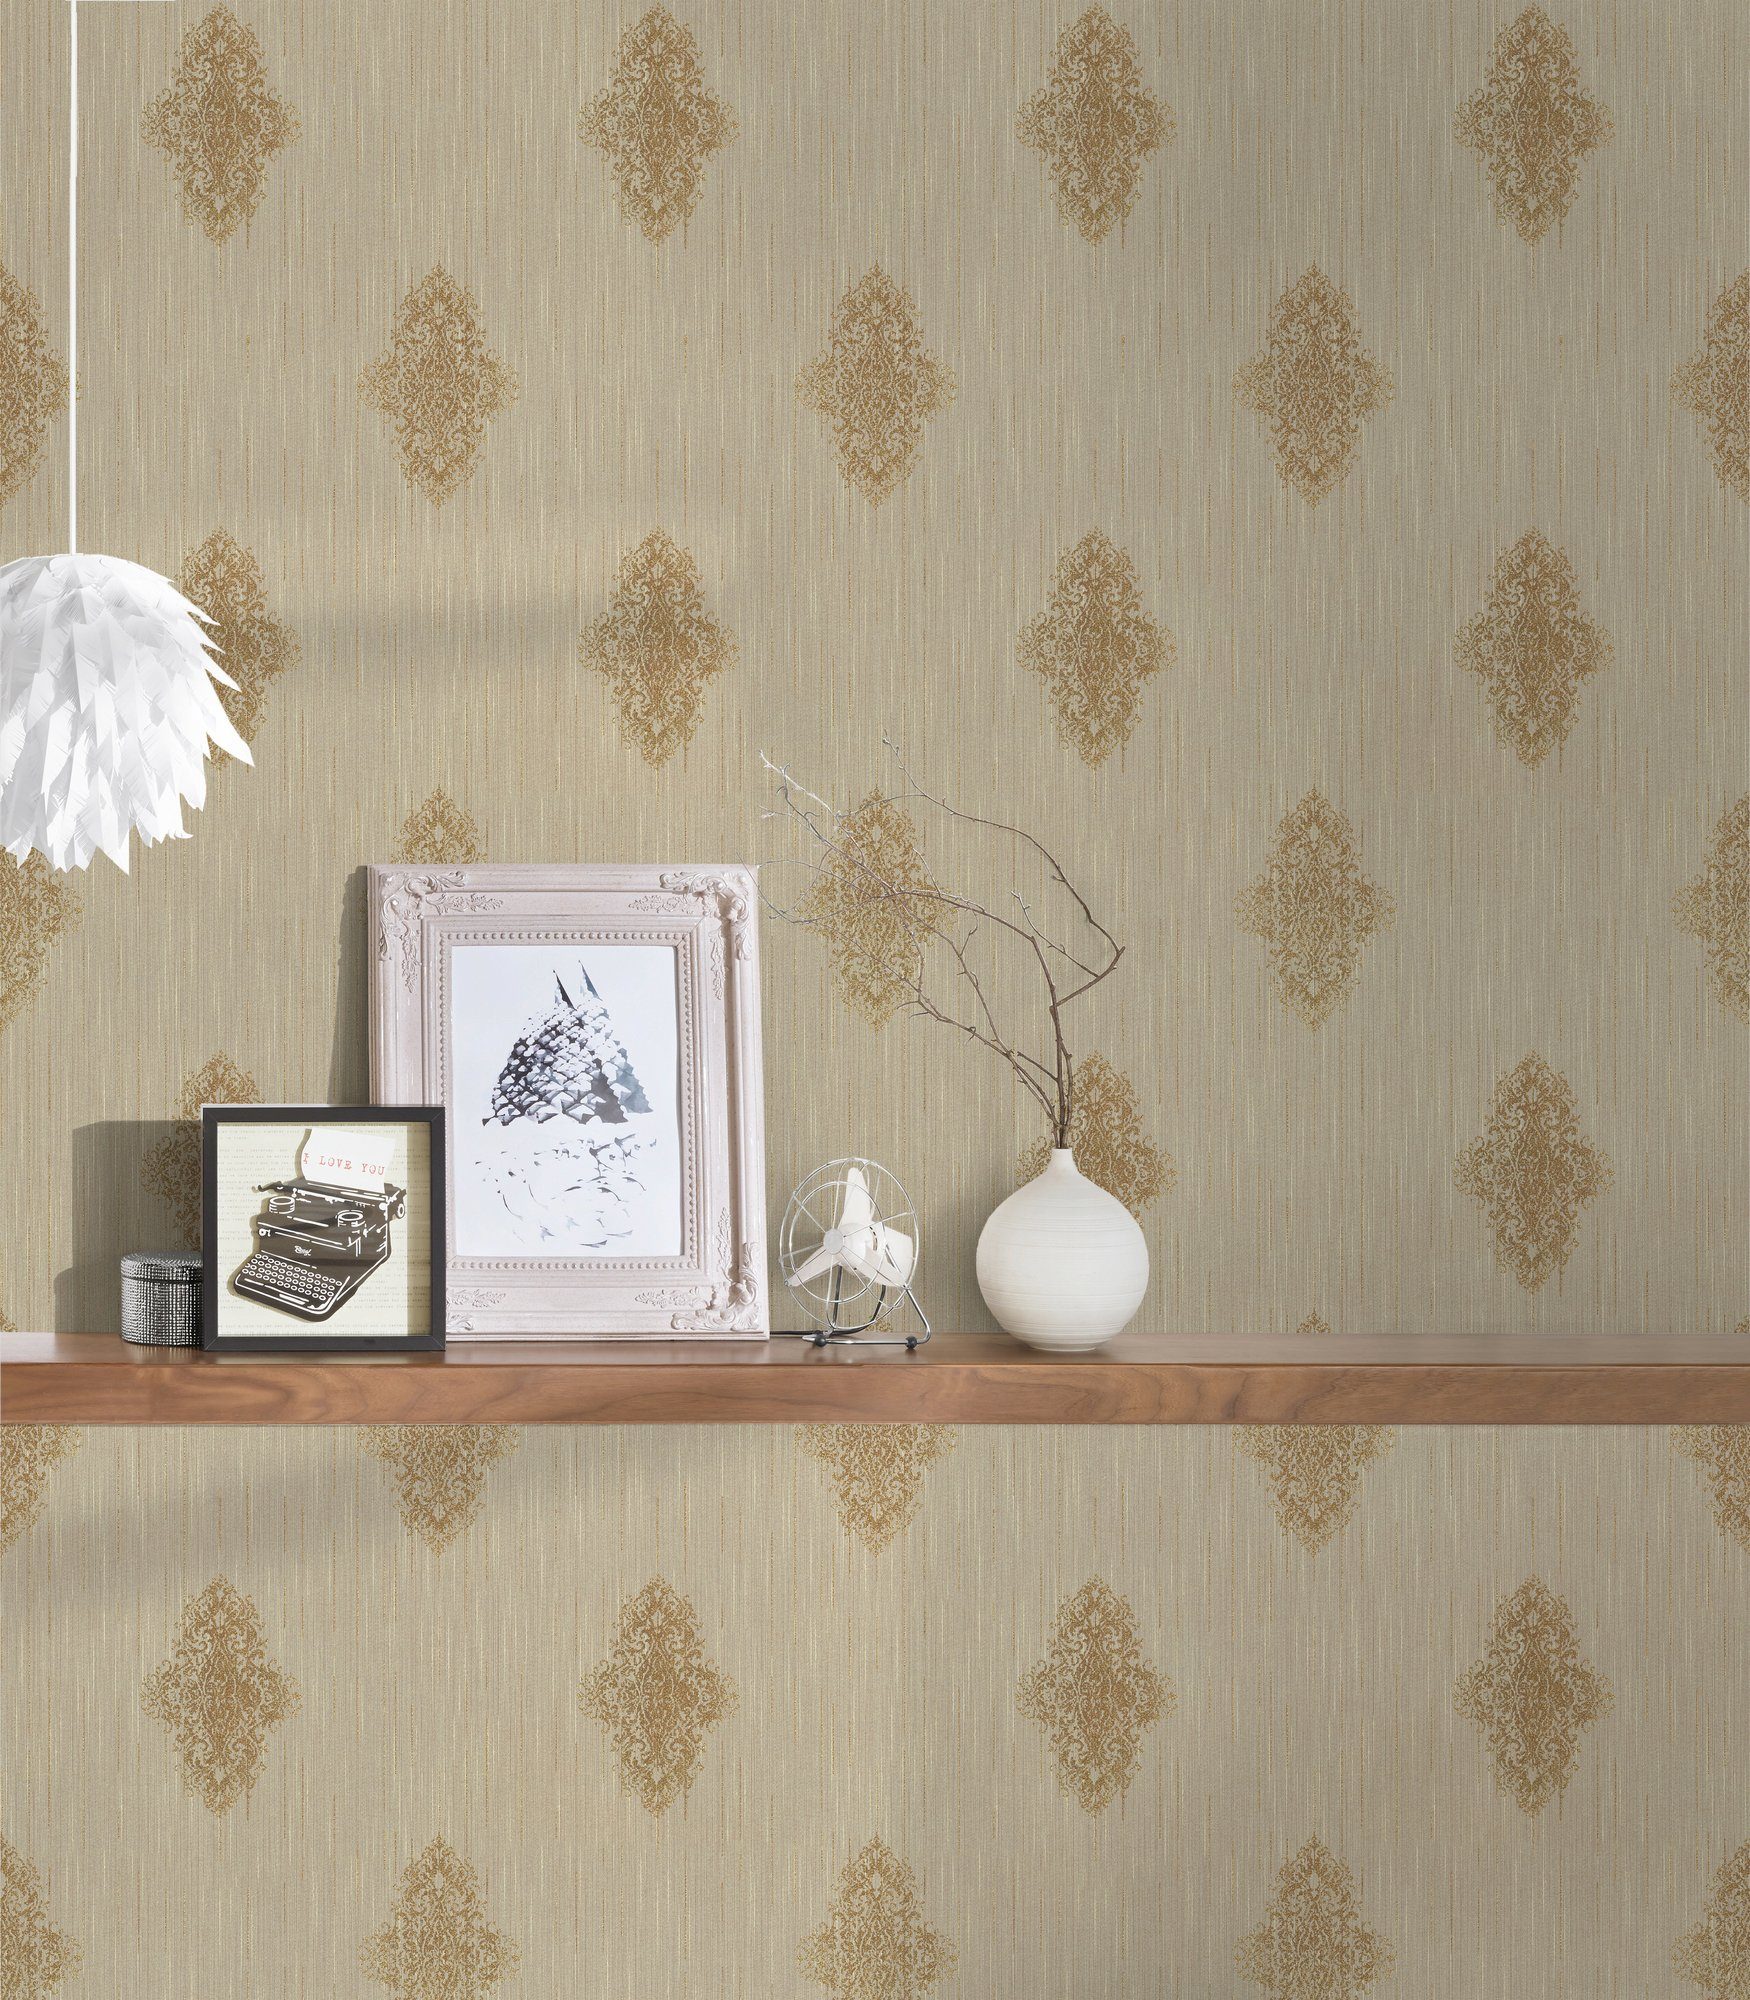 Paper wallpaper, Création A.S. Barock, Luxury beige/bronzefarben Effekt Textil samtig, Architects Tapete Barock Metallic Textiltapete